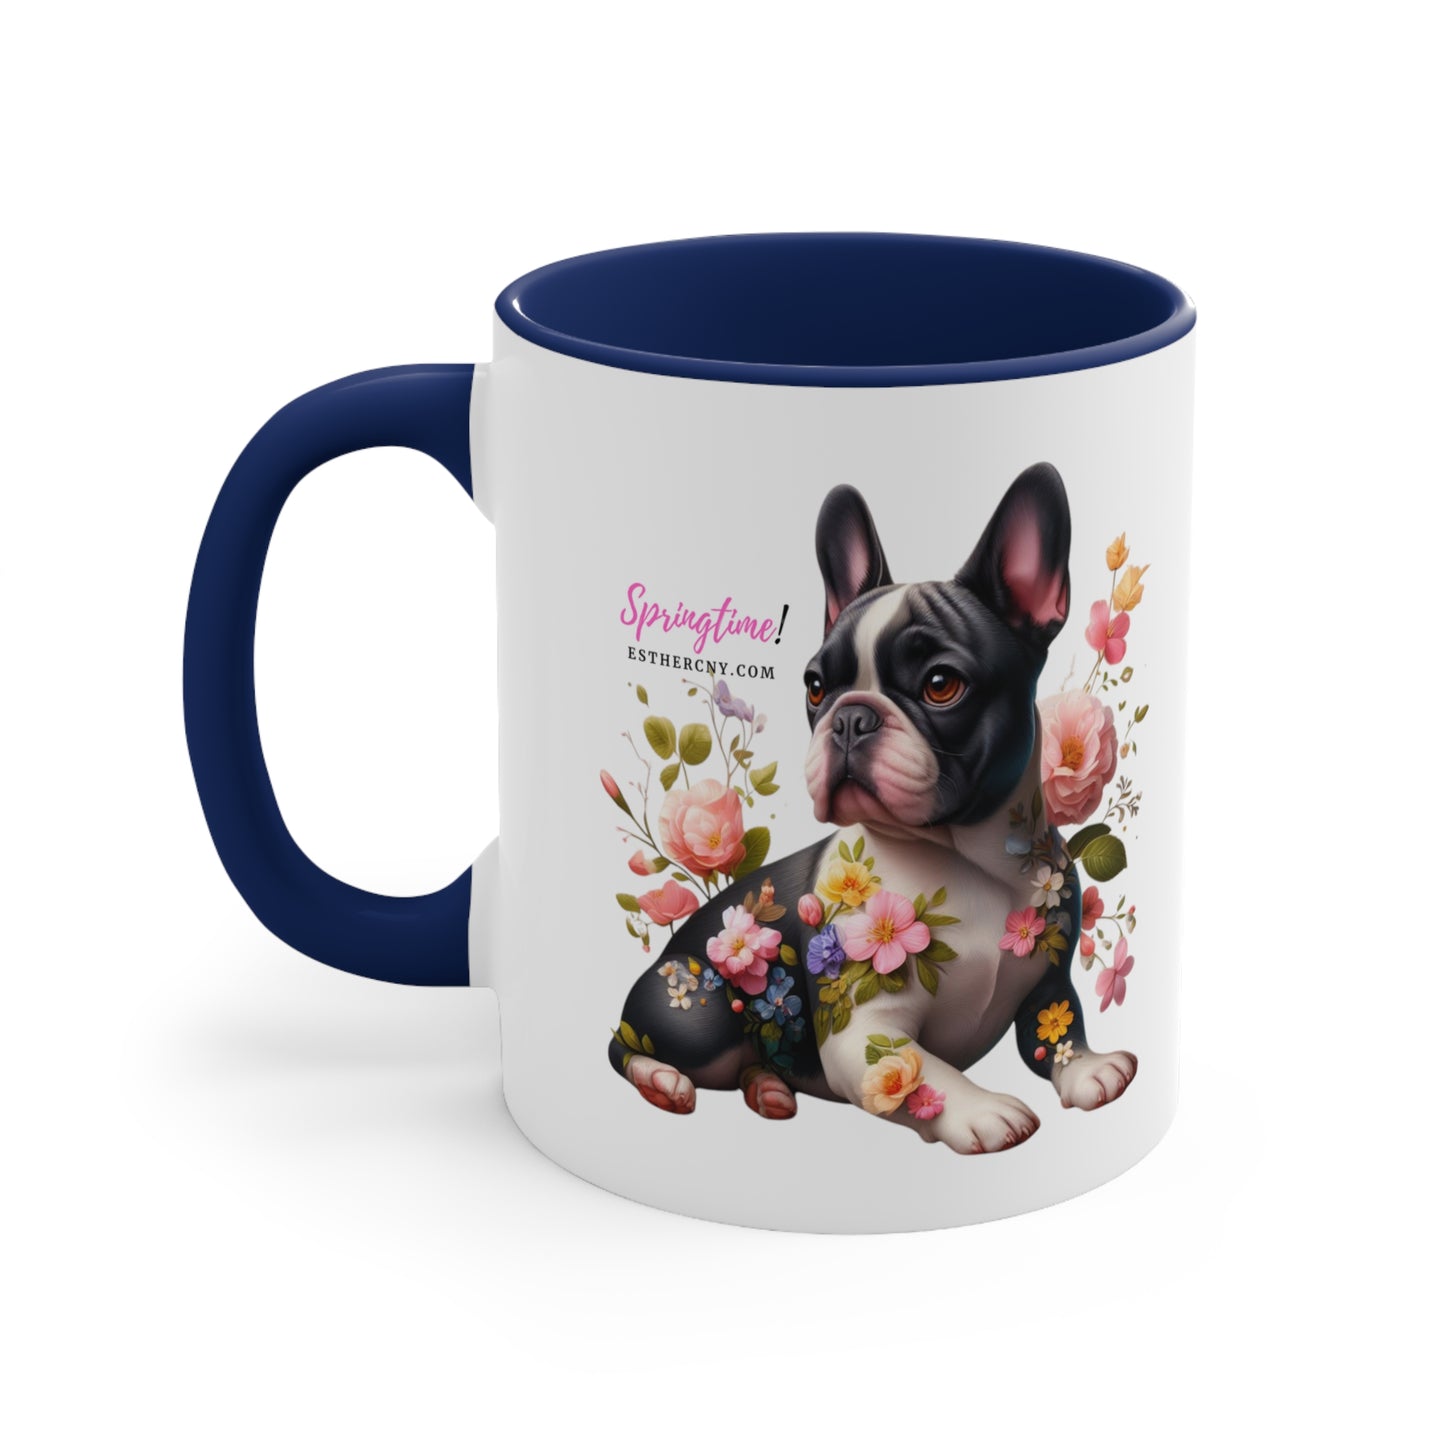 Springtime black & white French Bulldog Accent Coffee Mug, 11oz